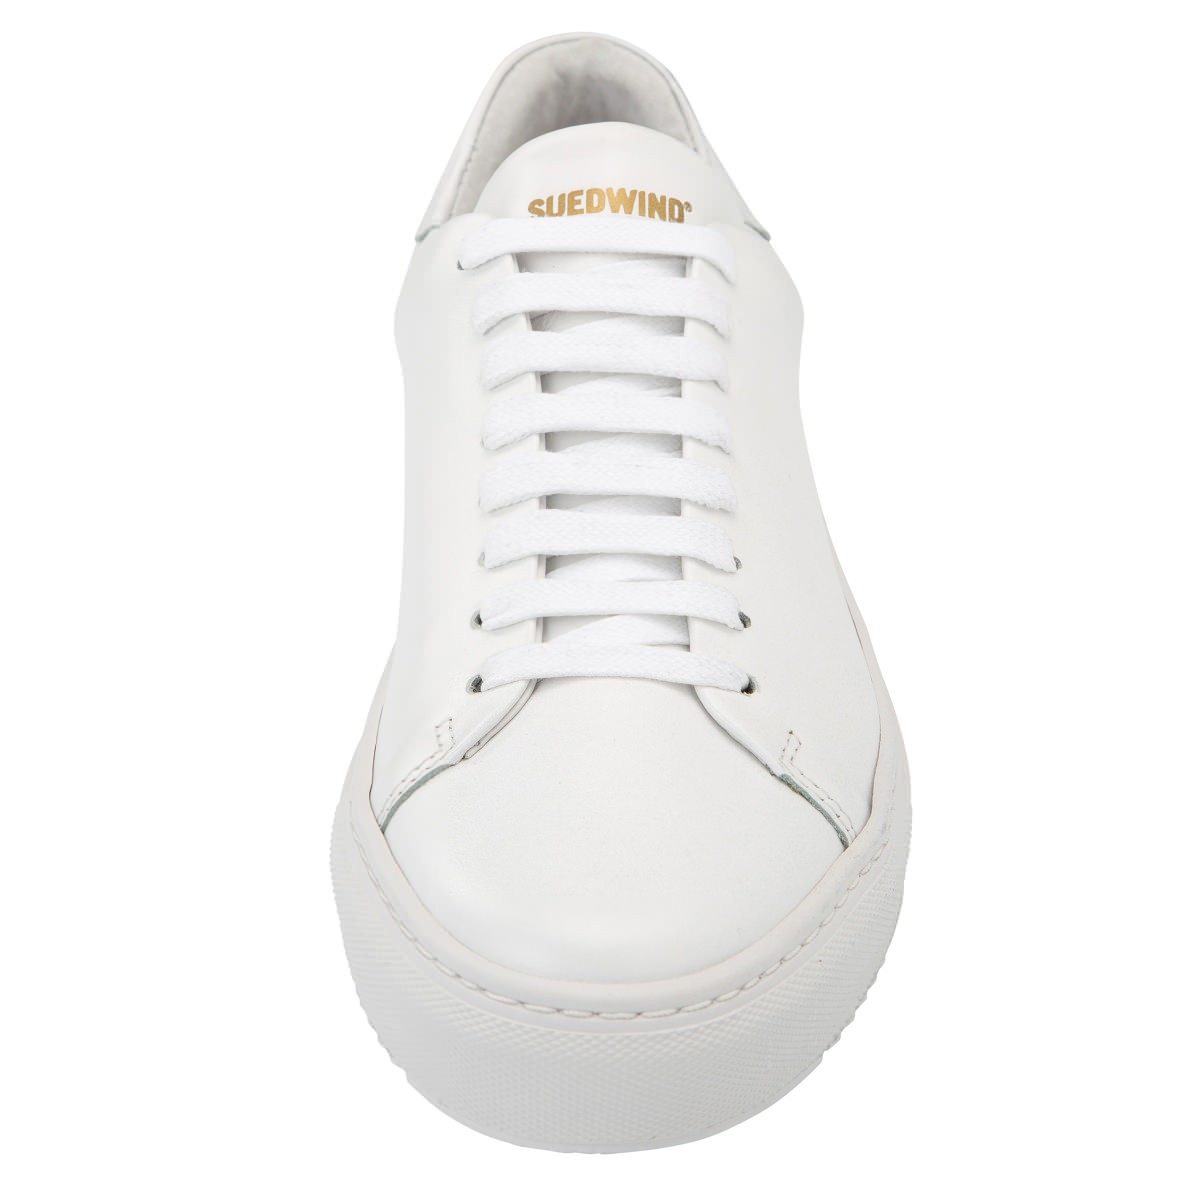 Suedwind-Ashton-Leather-Leder-Sneaker-Schuhe-Boots-White-Weiss-10170011-03_1280x1280